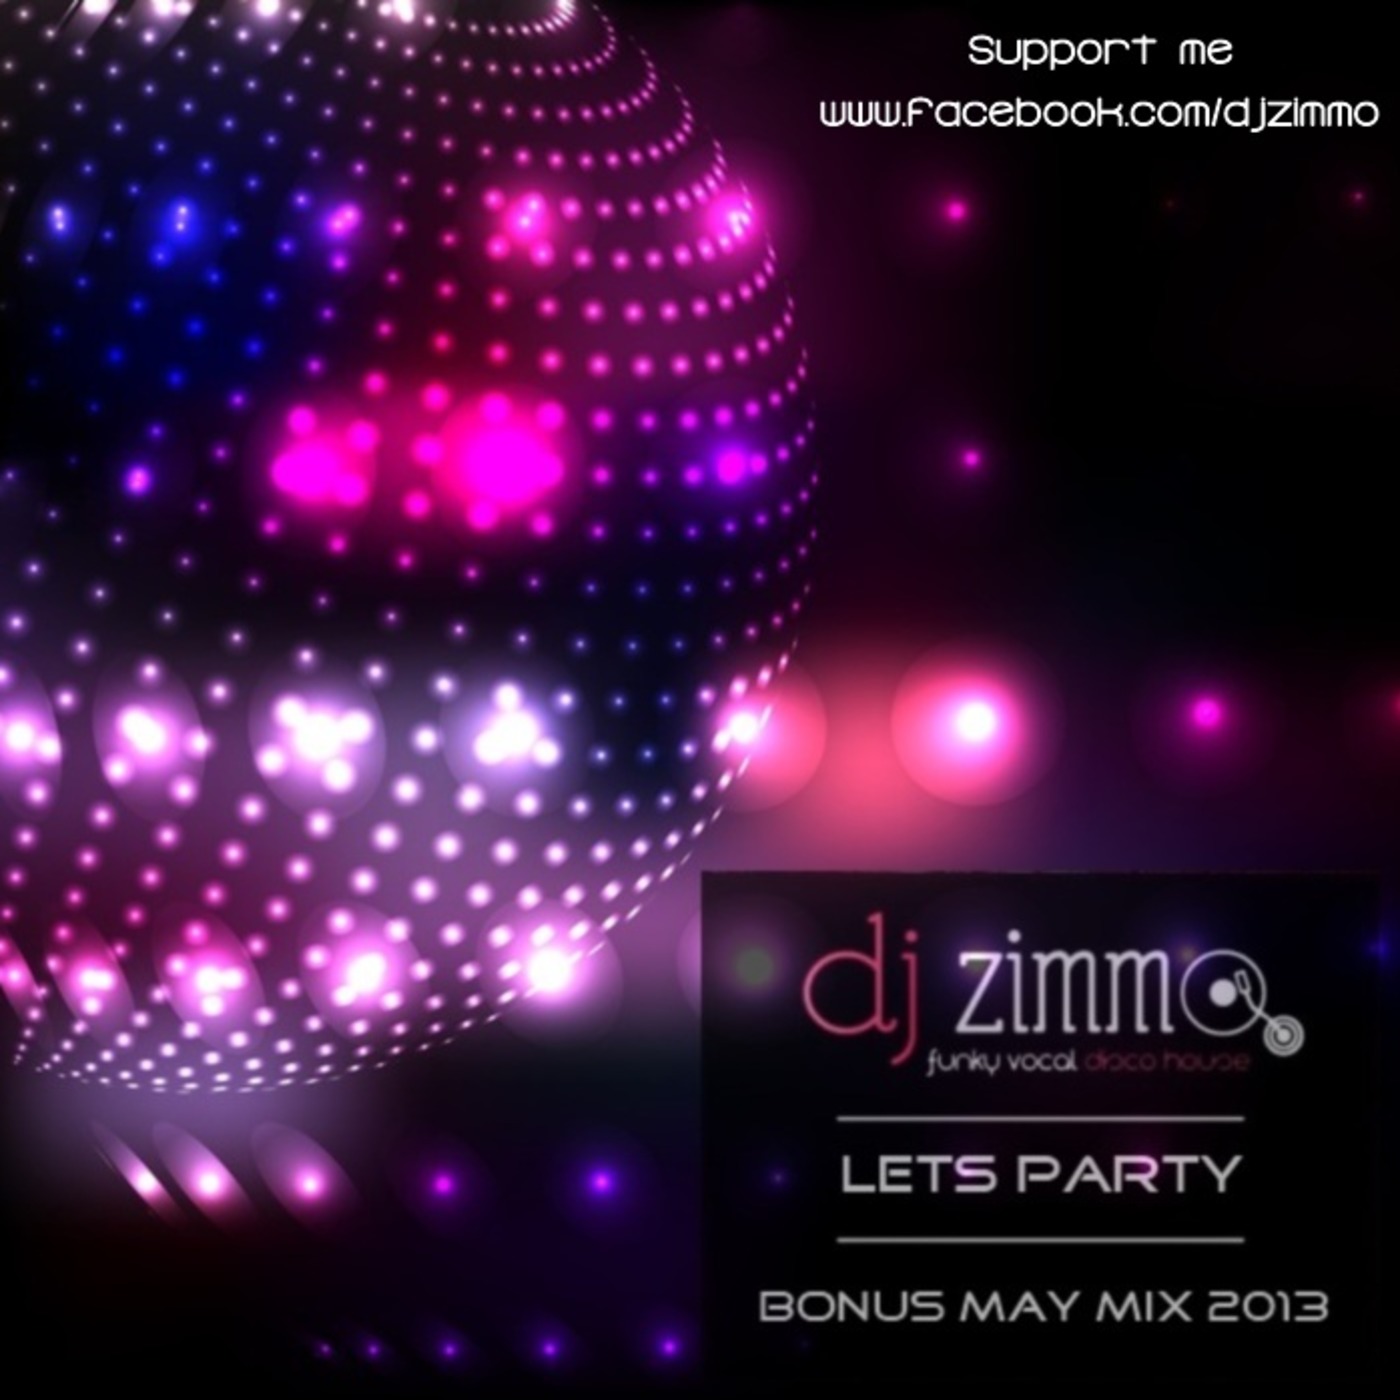 Lets Party - Bonus May Mix 2013